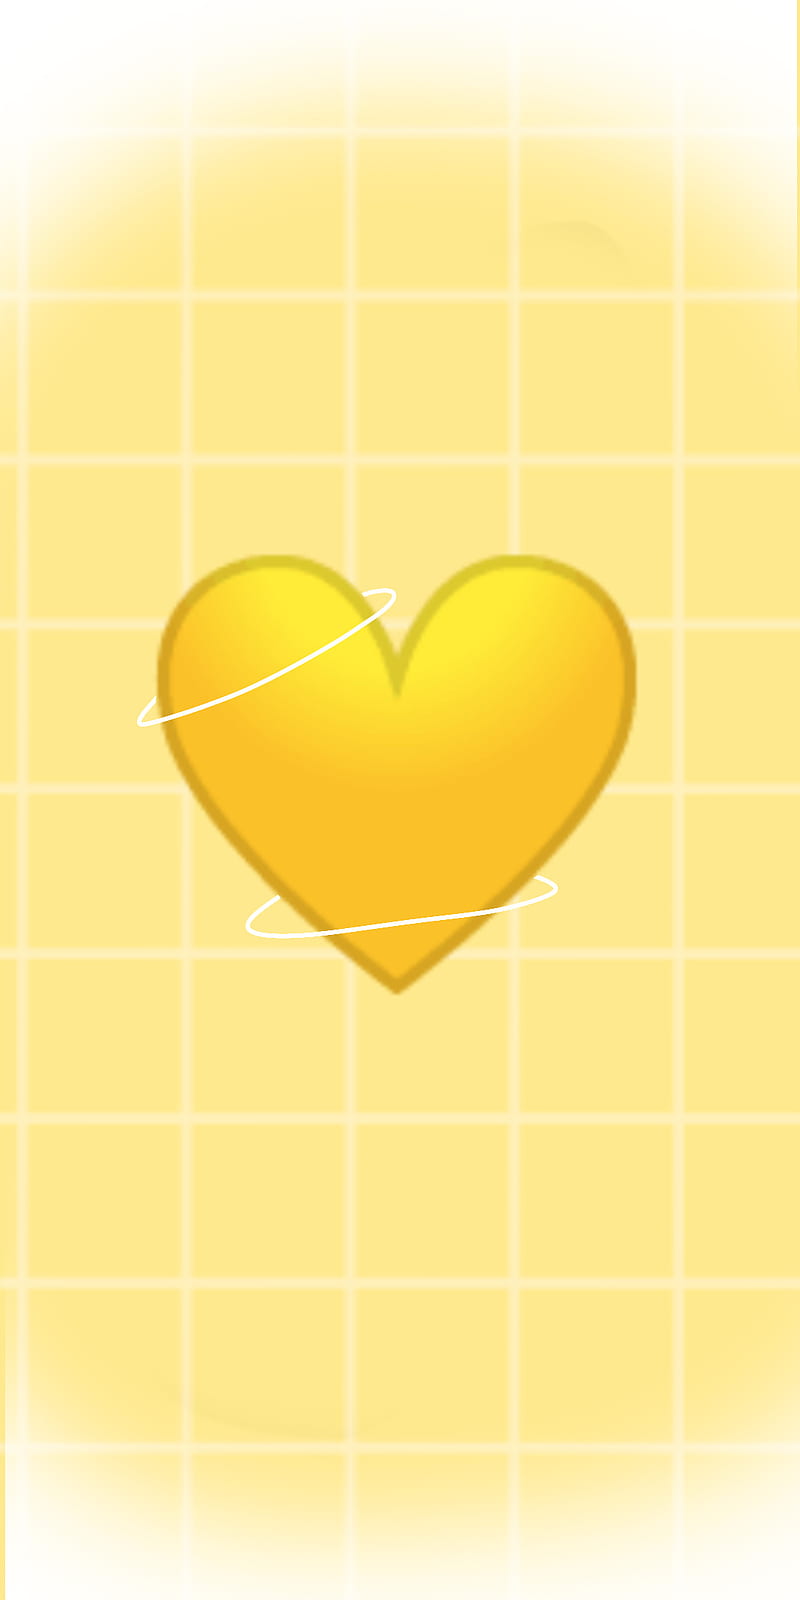 Yellow Heart Wallpaper Background Illustration Stock Vector  Illustration  of february wedding 162891410